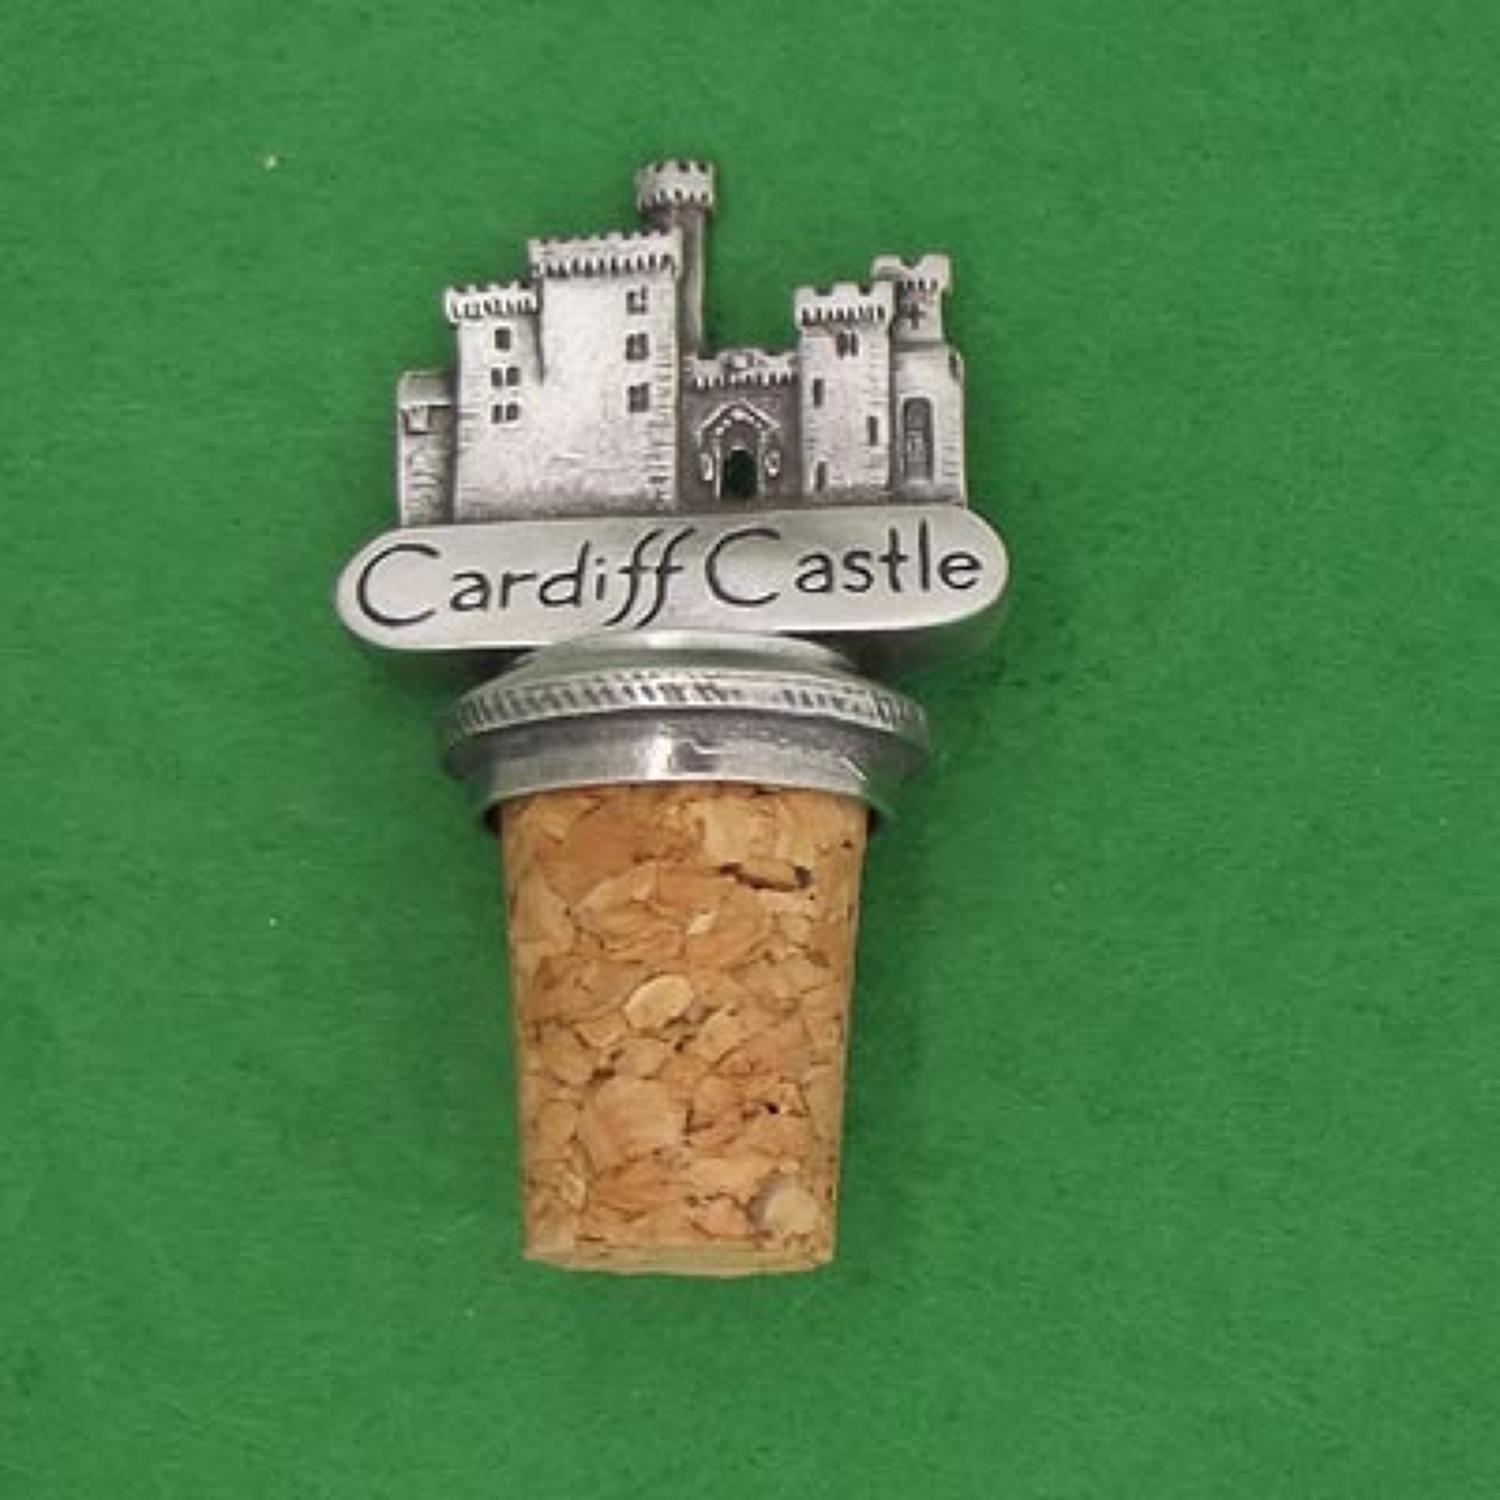 BS1401 Cardiff Castle